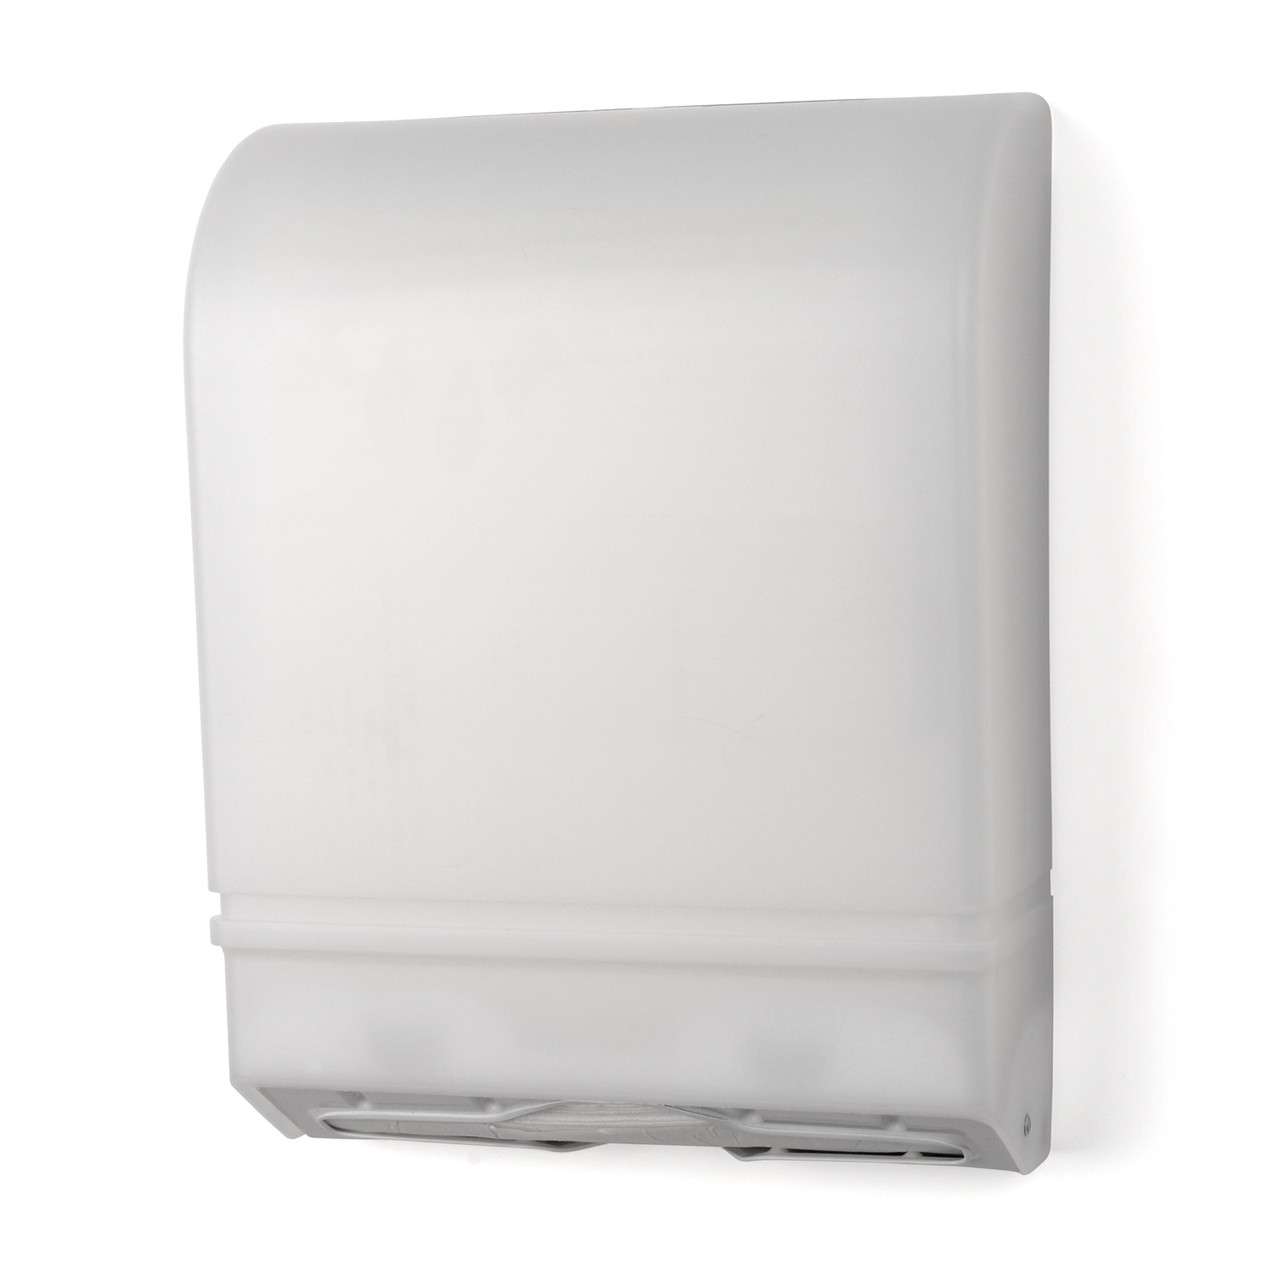 Palmer Fixture Multi-Fold/C-Fold Paper Towel Dispenser White Translucent TD0175-03